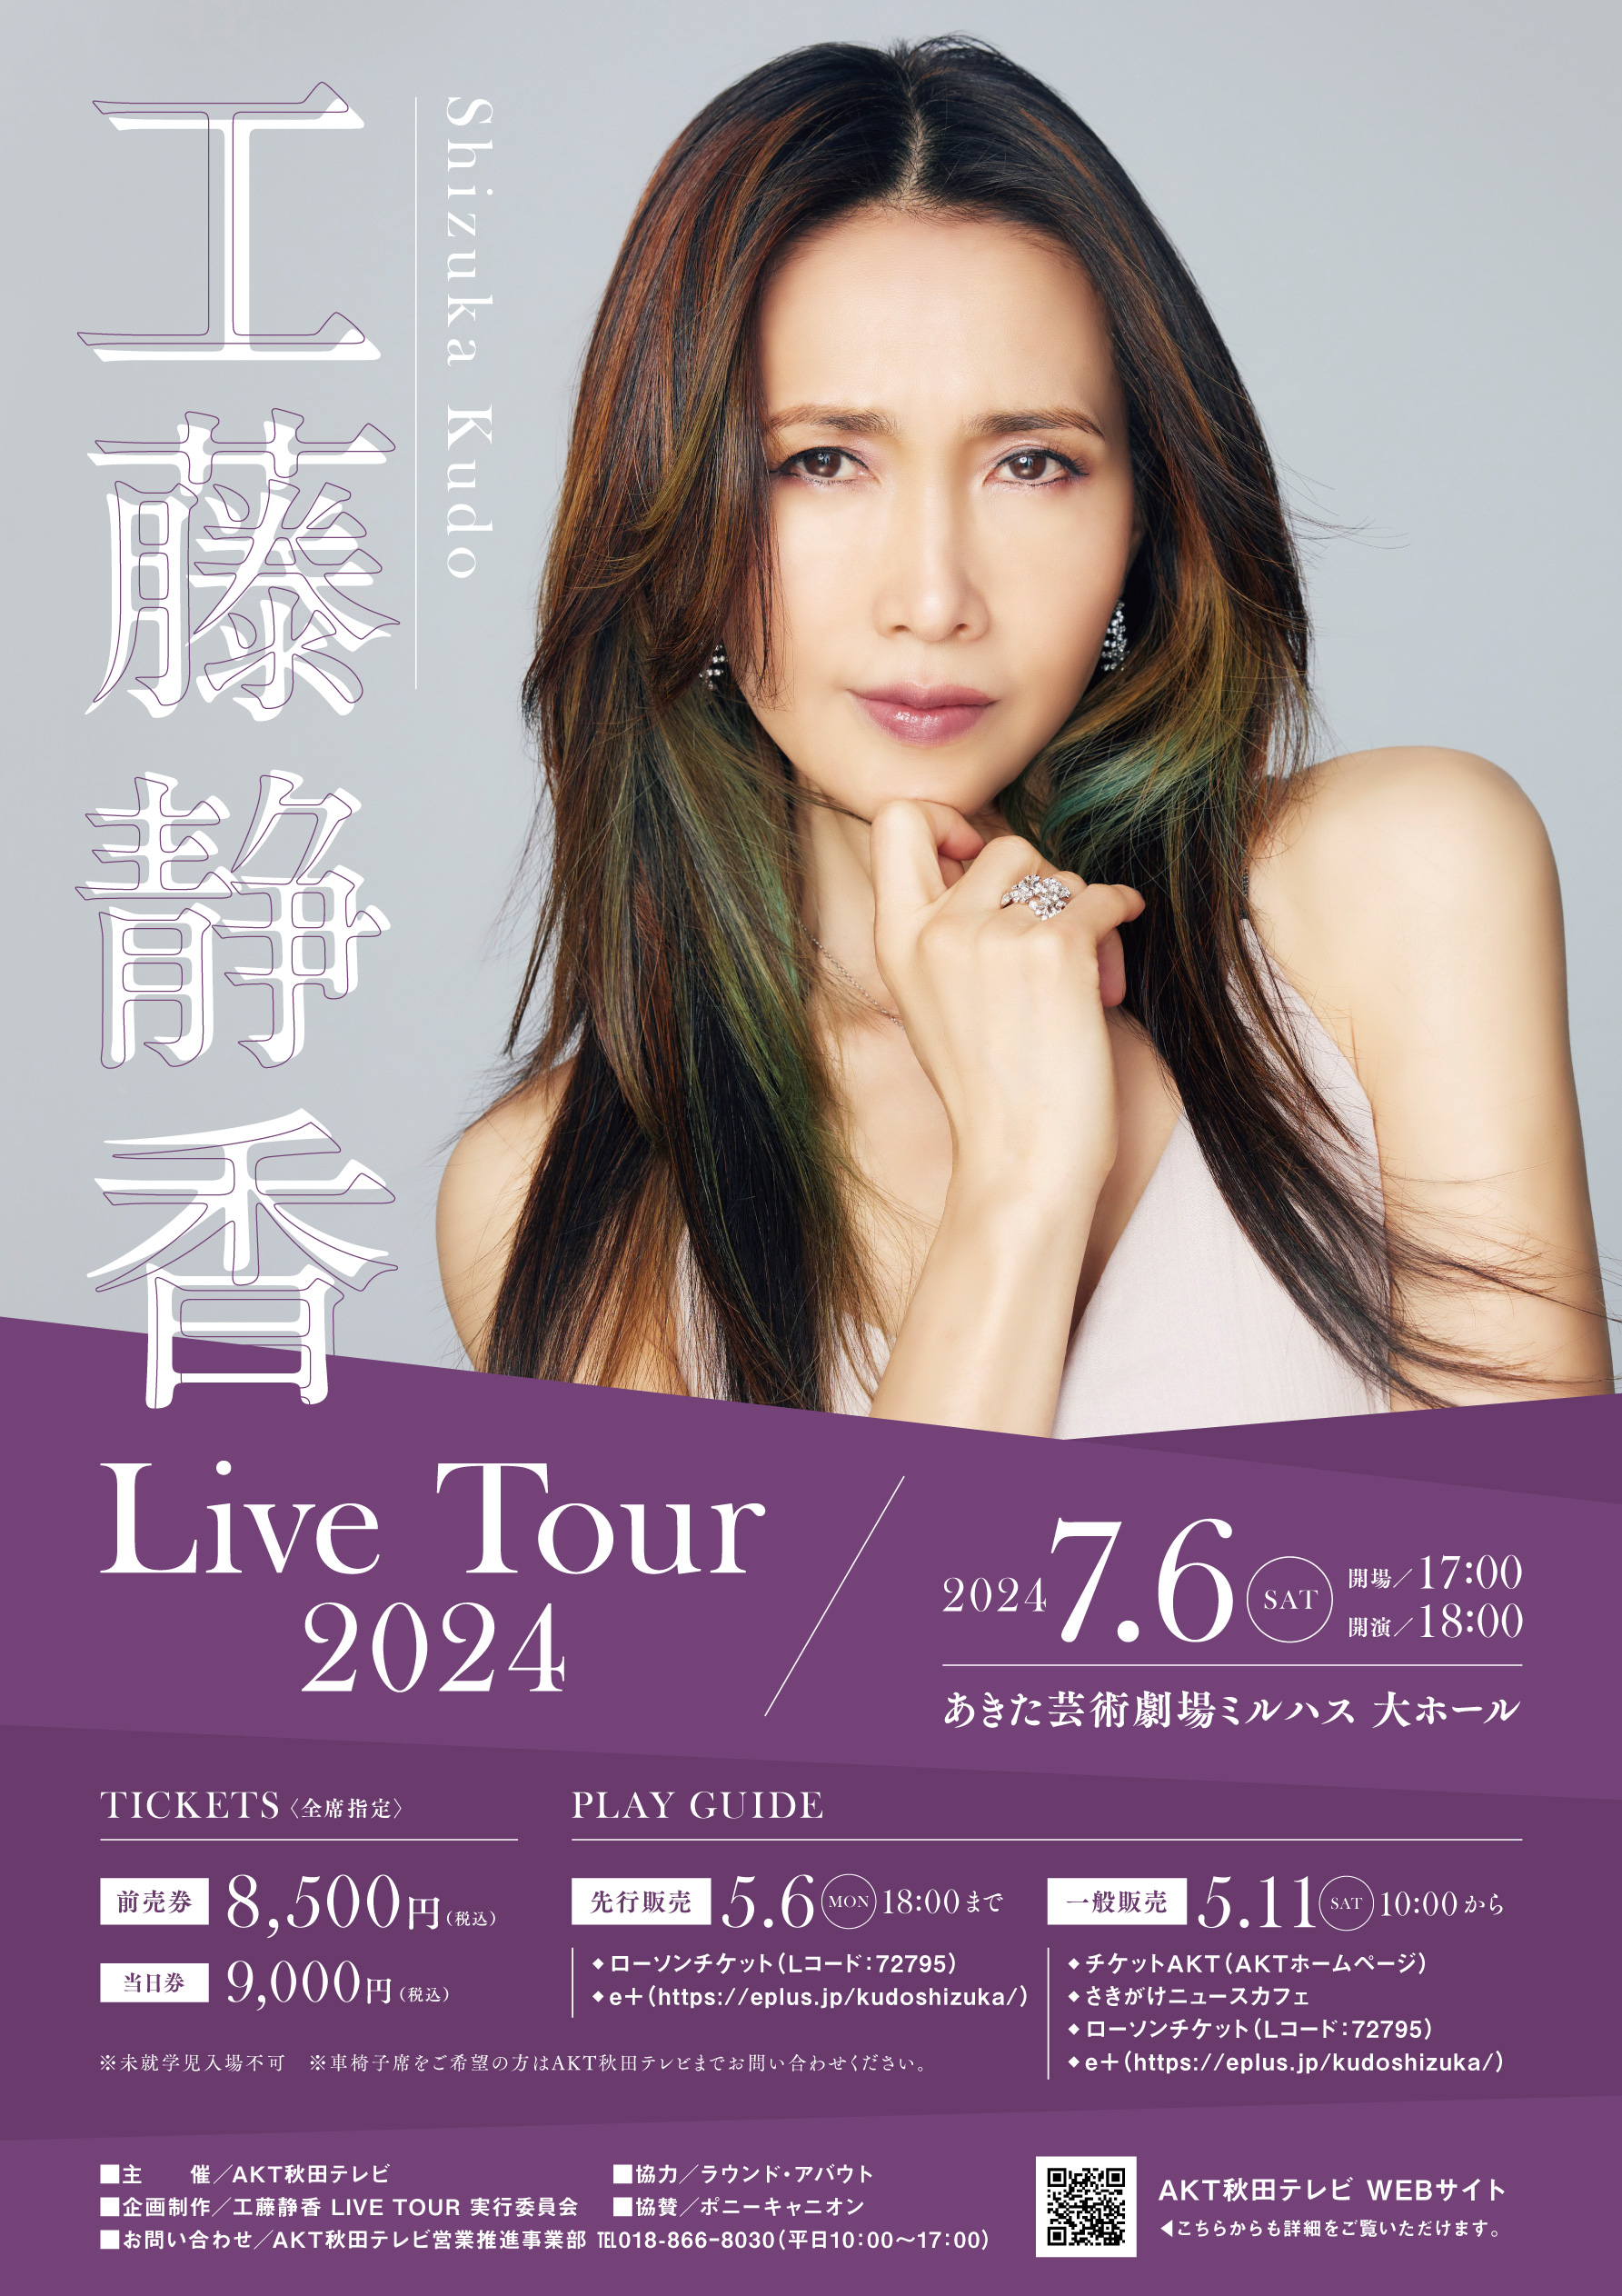 Shizuka Kudo「明鏡止水〜piece of my heart〜」Concert Tour 2024